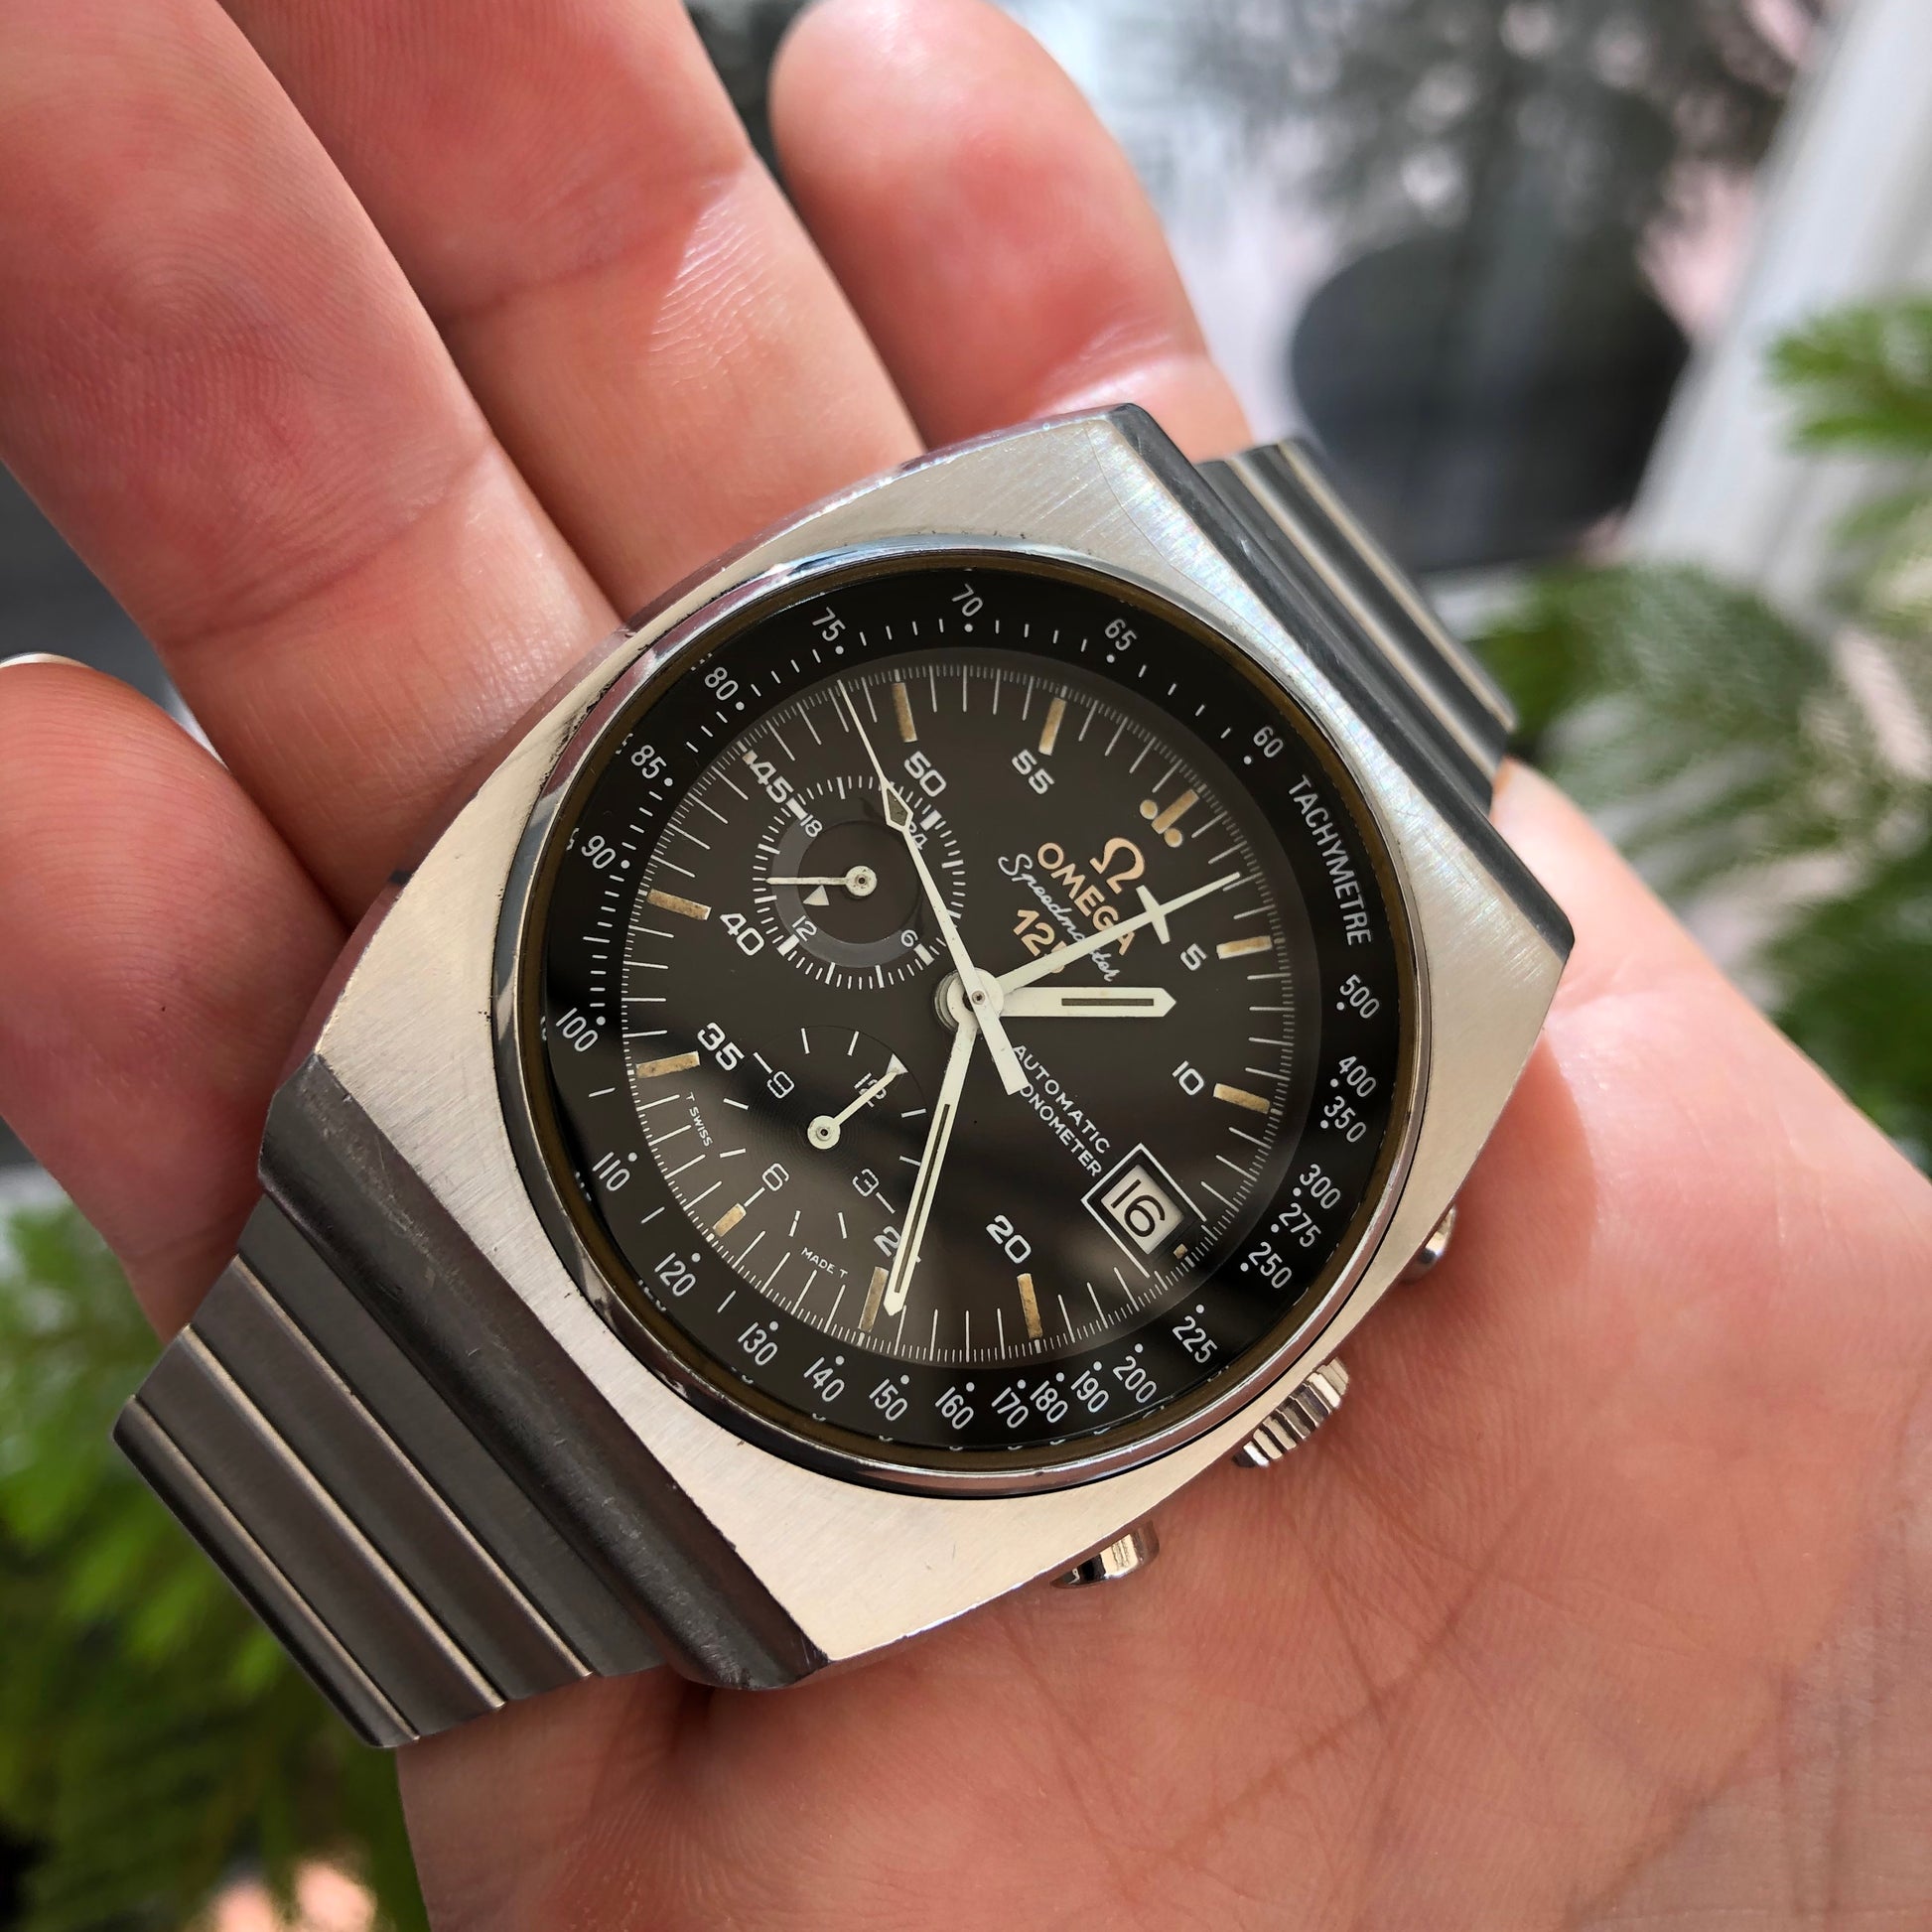 Vintage Omega Speedmaster 125 378.0801 Steel Automatic Chronograph Wristwatch - Hashtag Watch Company